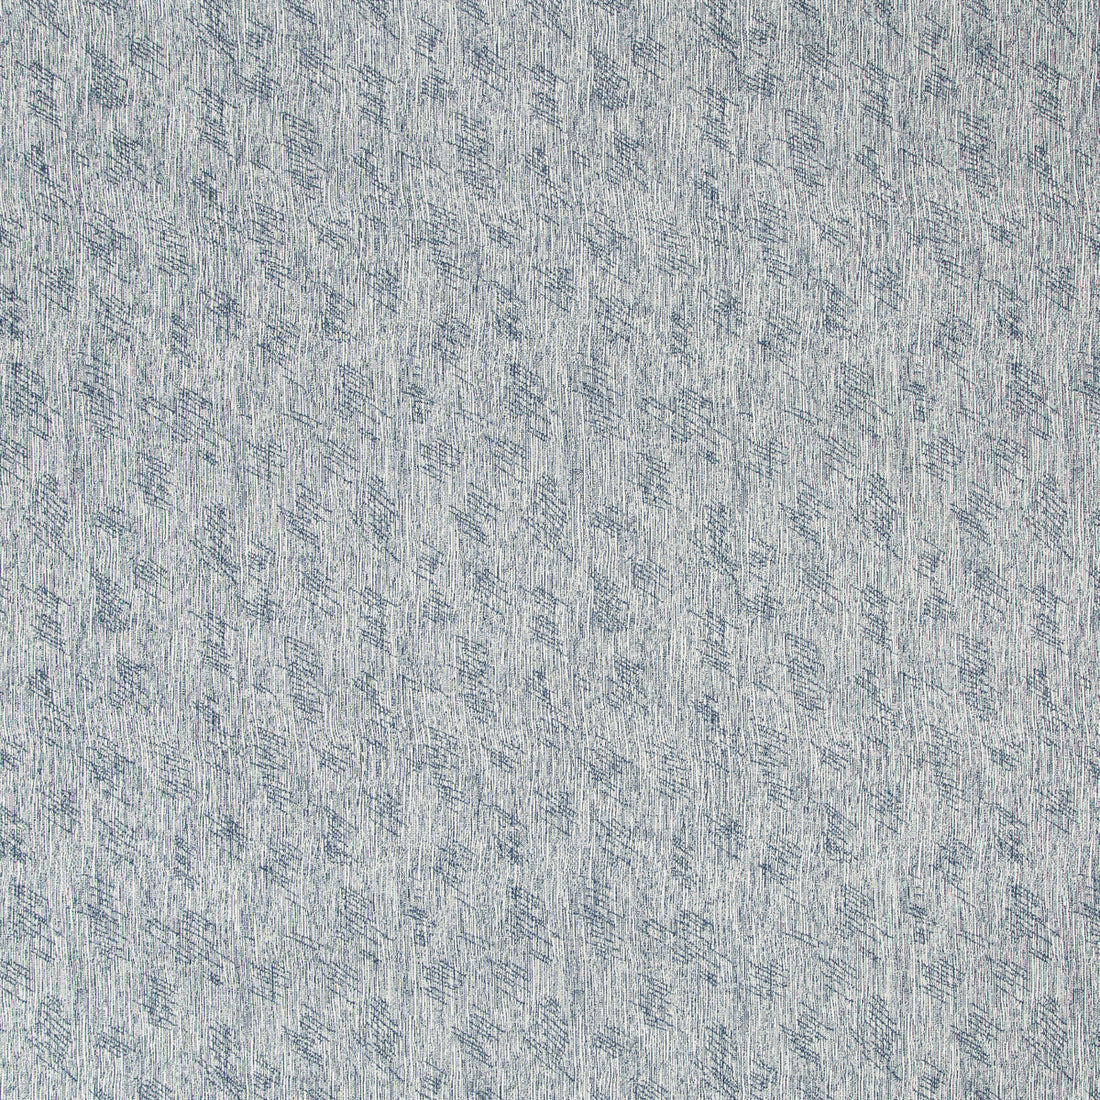 Lj Grw fabric - pattern 2019143.50.0 - by Lee Jofa Modern in the Kw Terra Firma III Indoor Outdoor collection